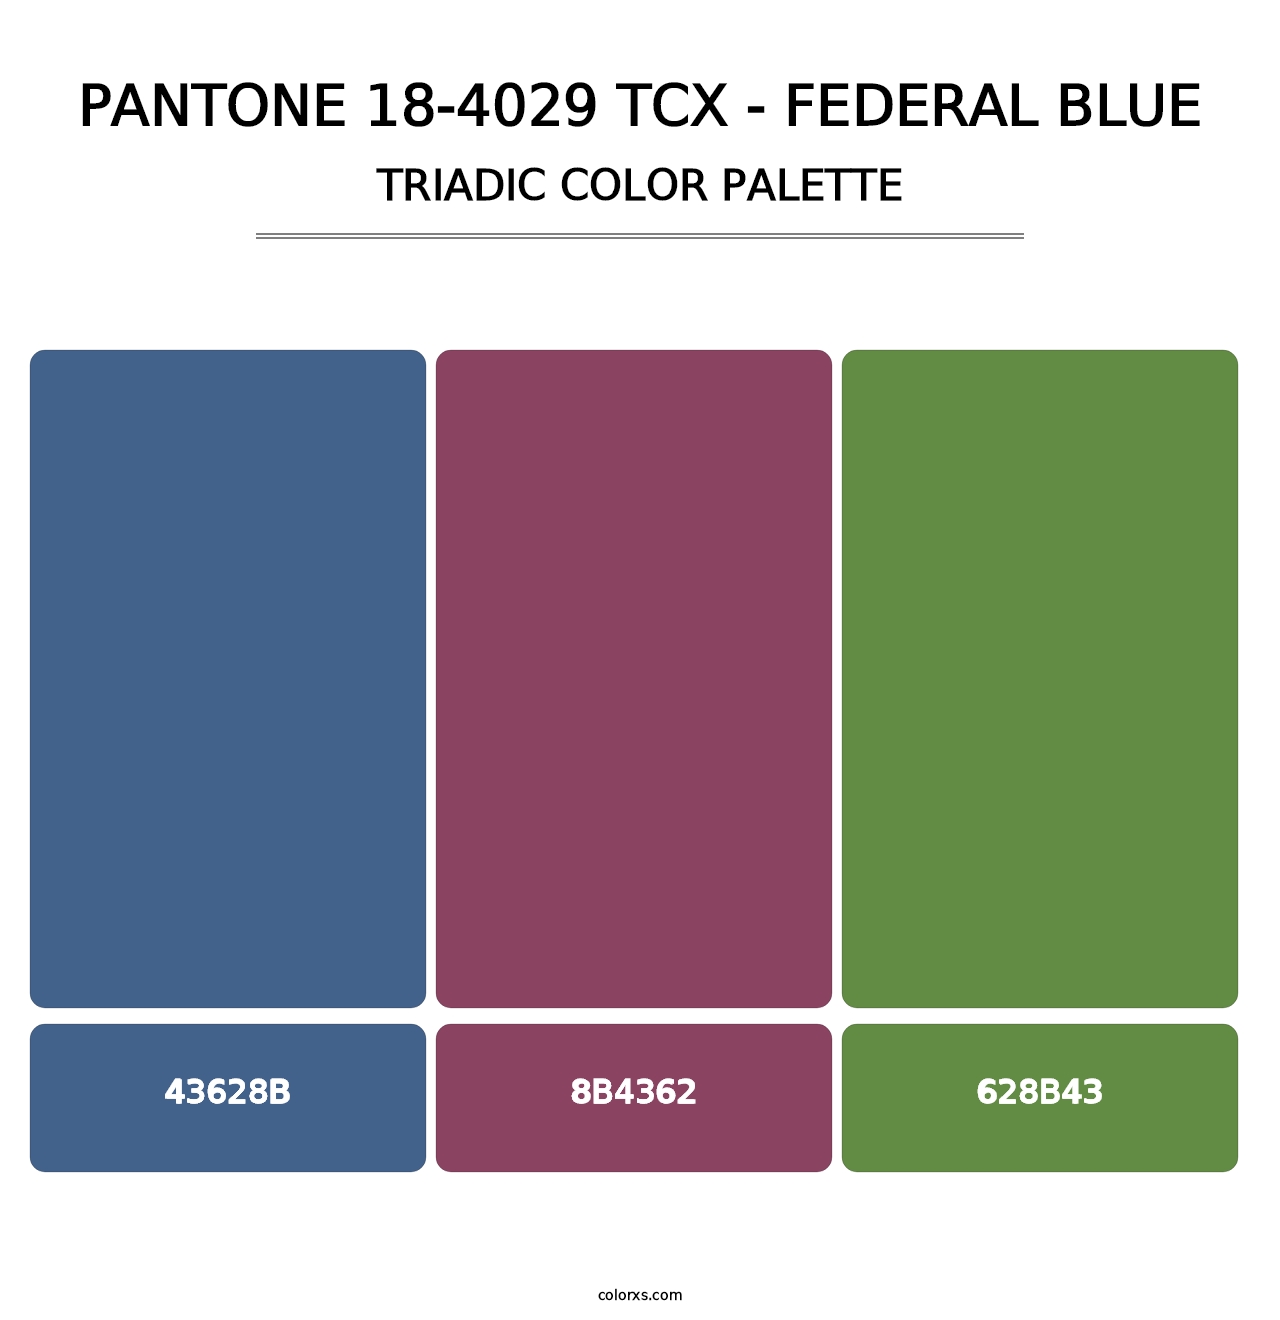 PANTONE 18-4029 TCX - Federal Blue - Triadic Color Palette